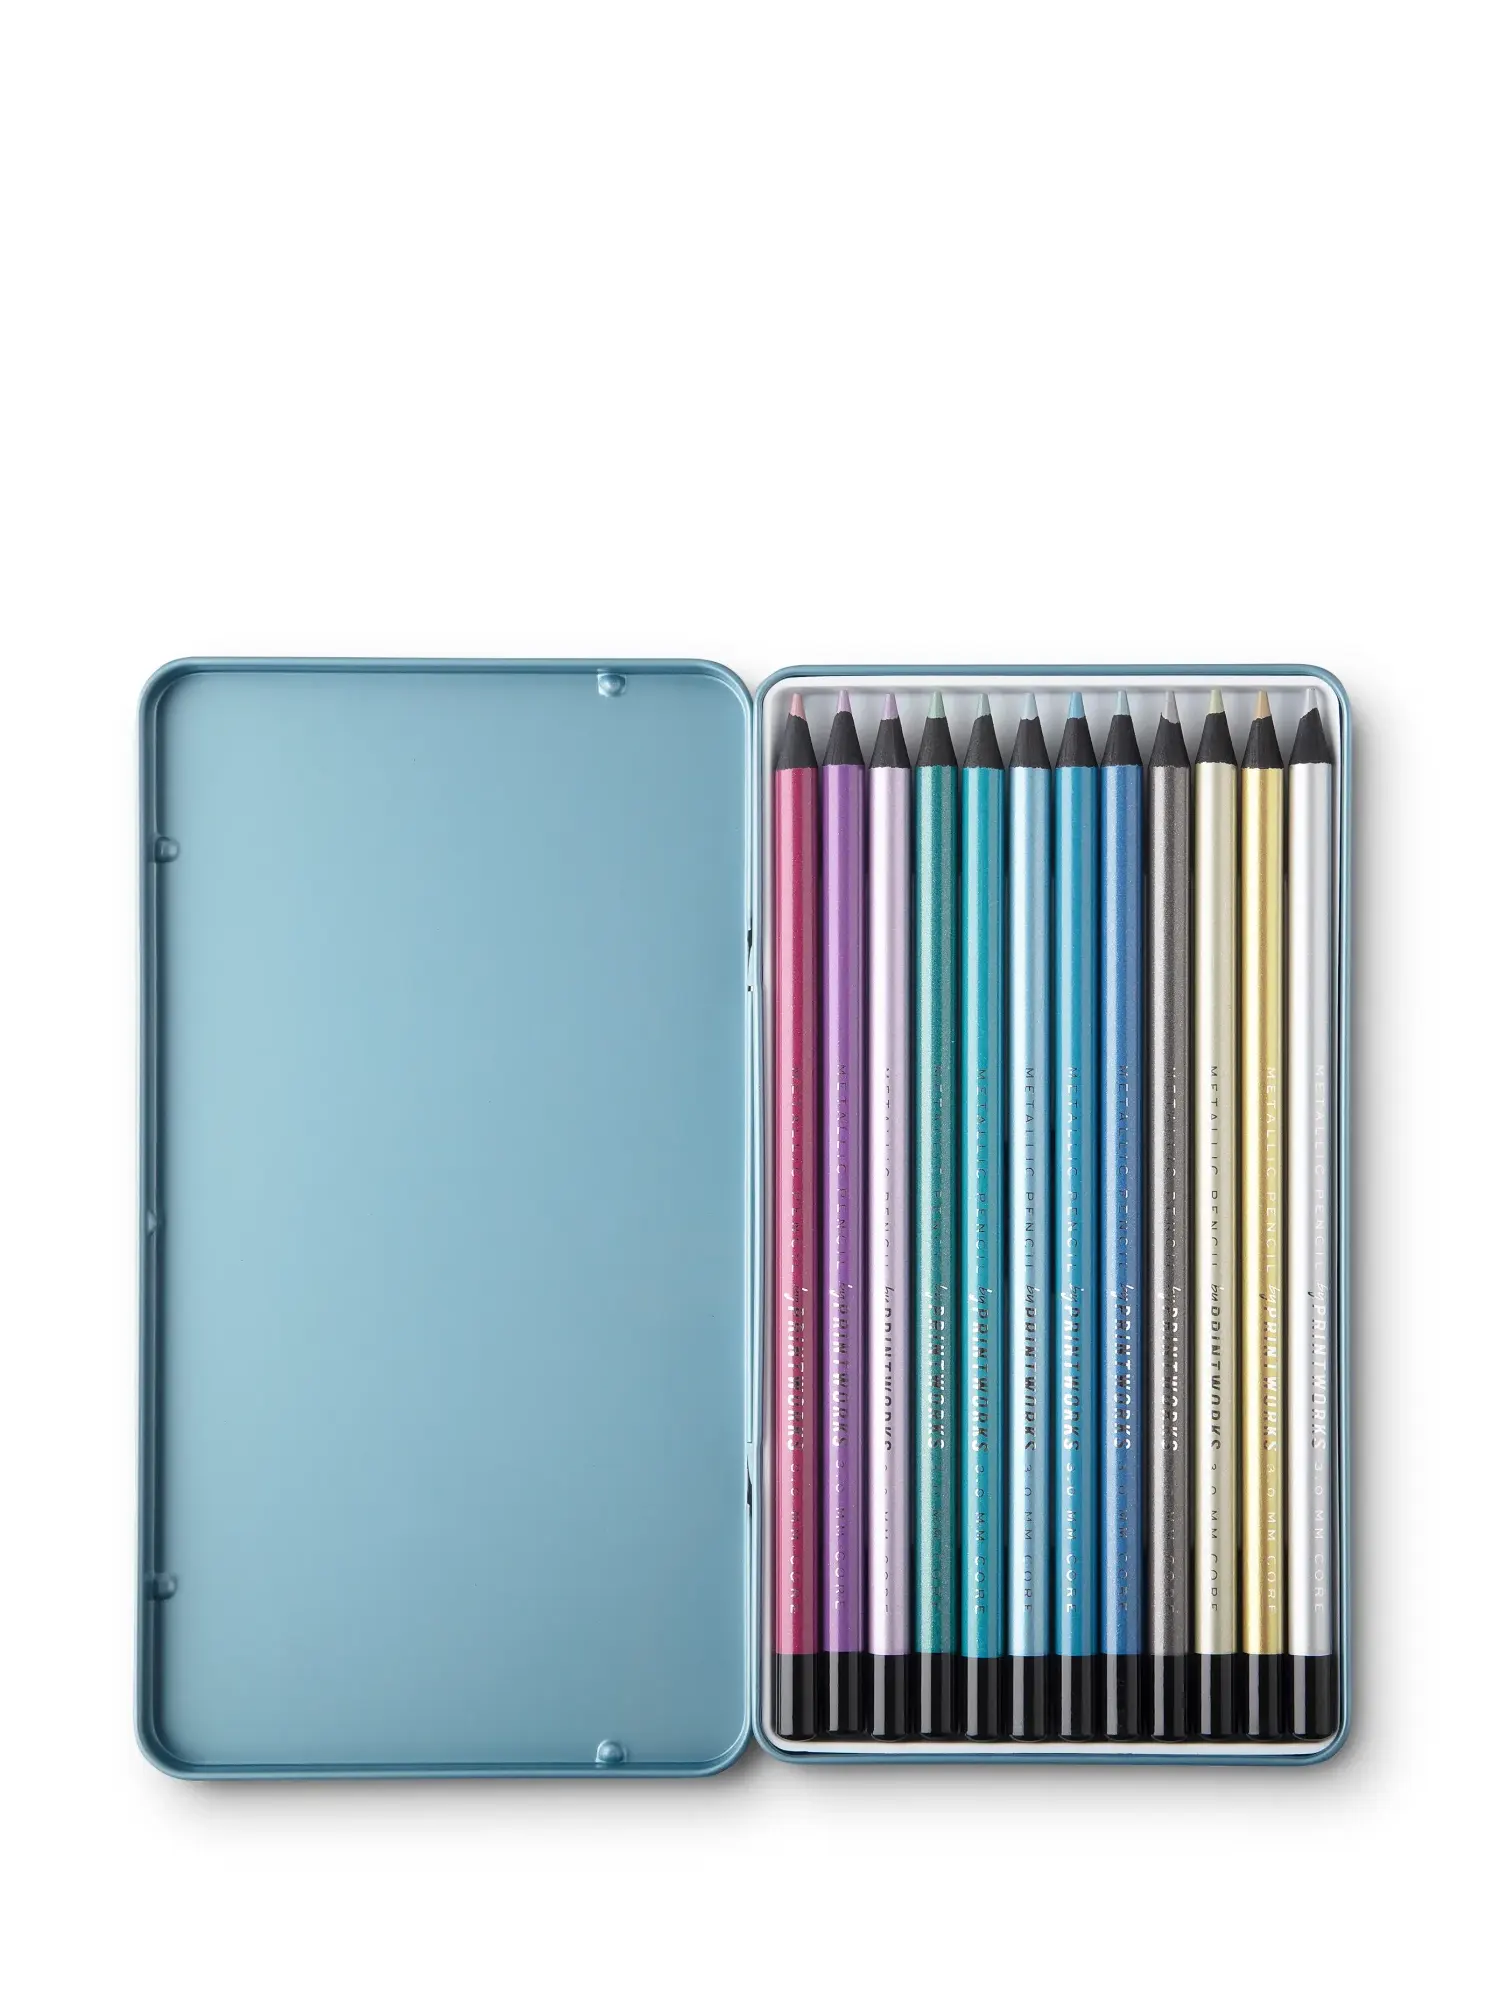 Set of 12 Colour Pencils, Metallic